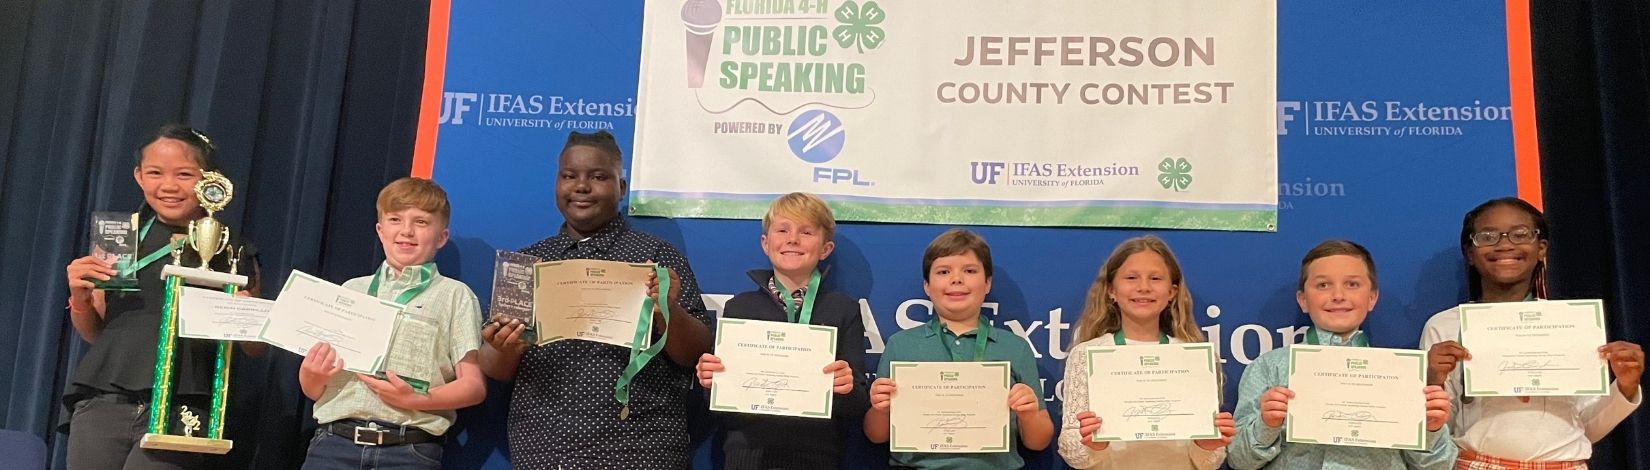 Florida 4-H School Speech Contest, Jefferson County participants group photo